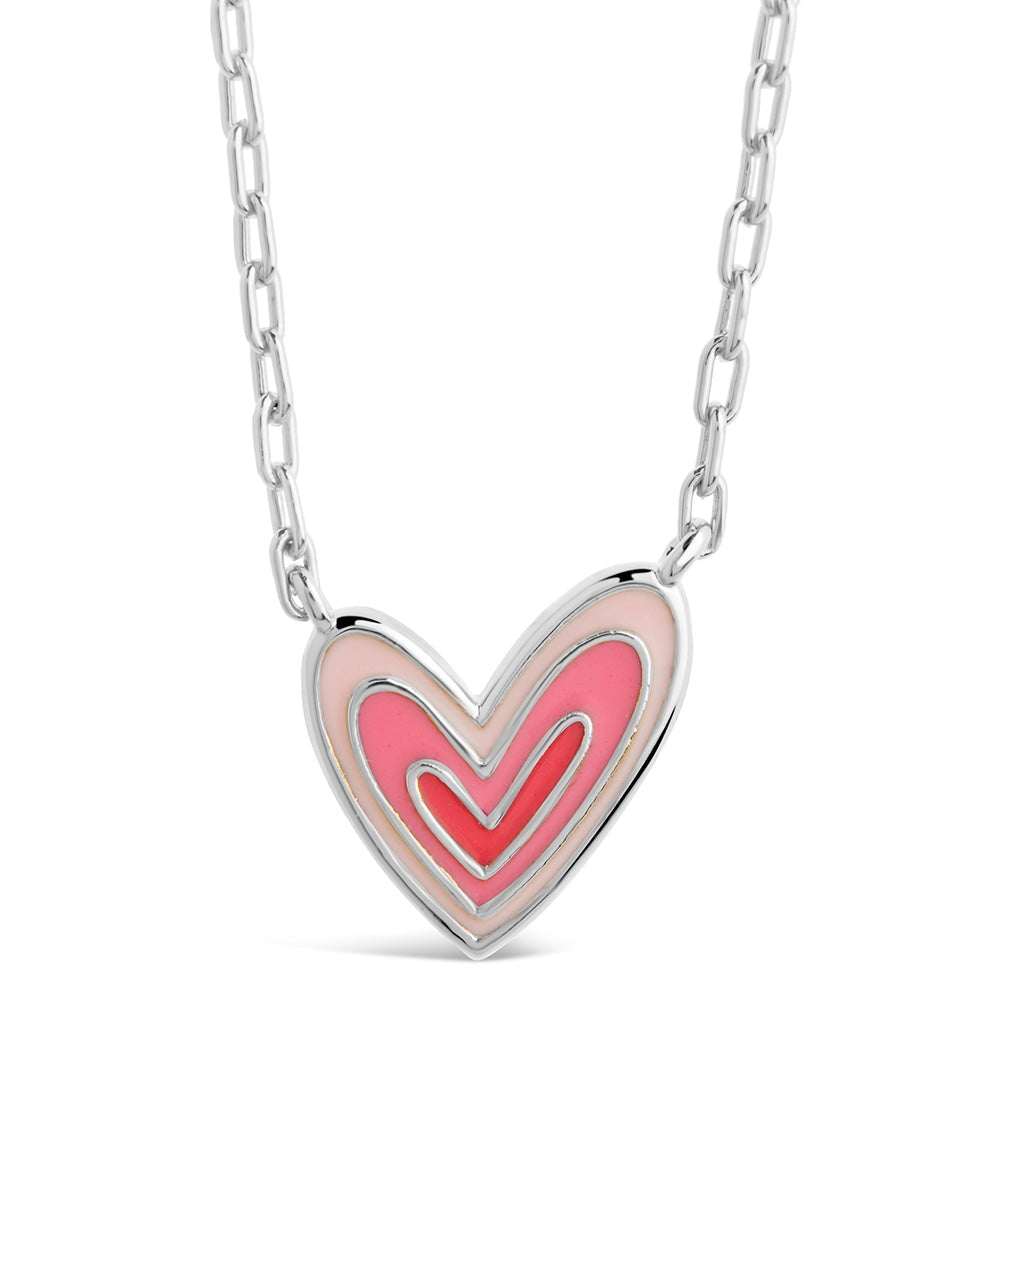 Amanda Enamel Heart Pendant Necklace Necklace Sterling Forever Silver 